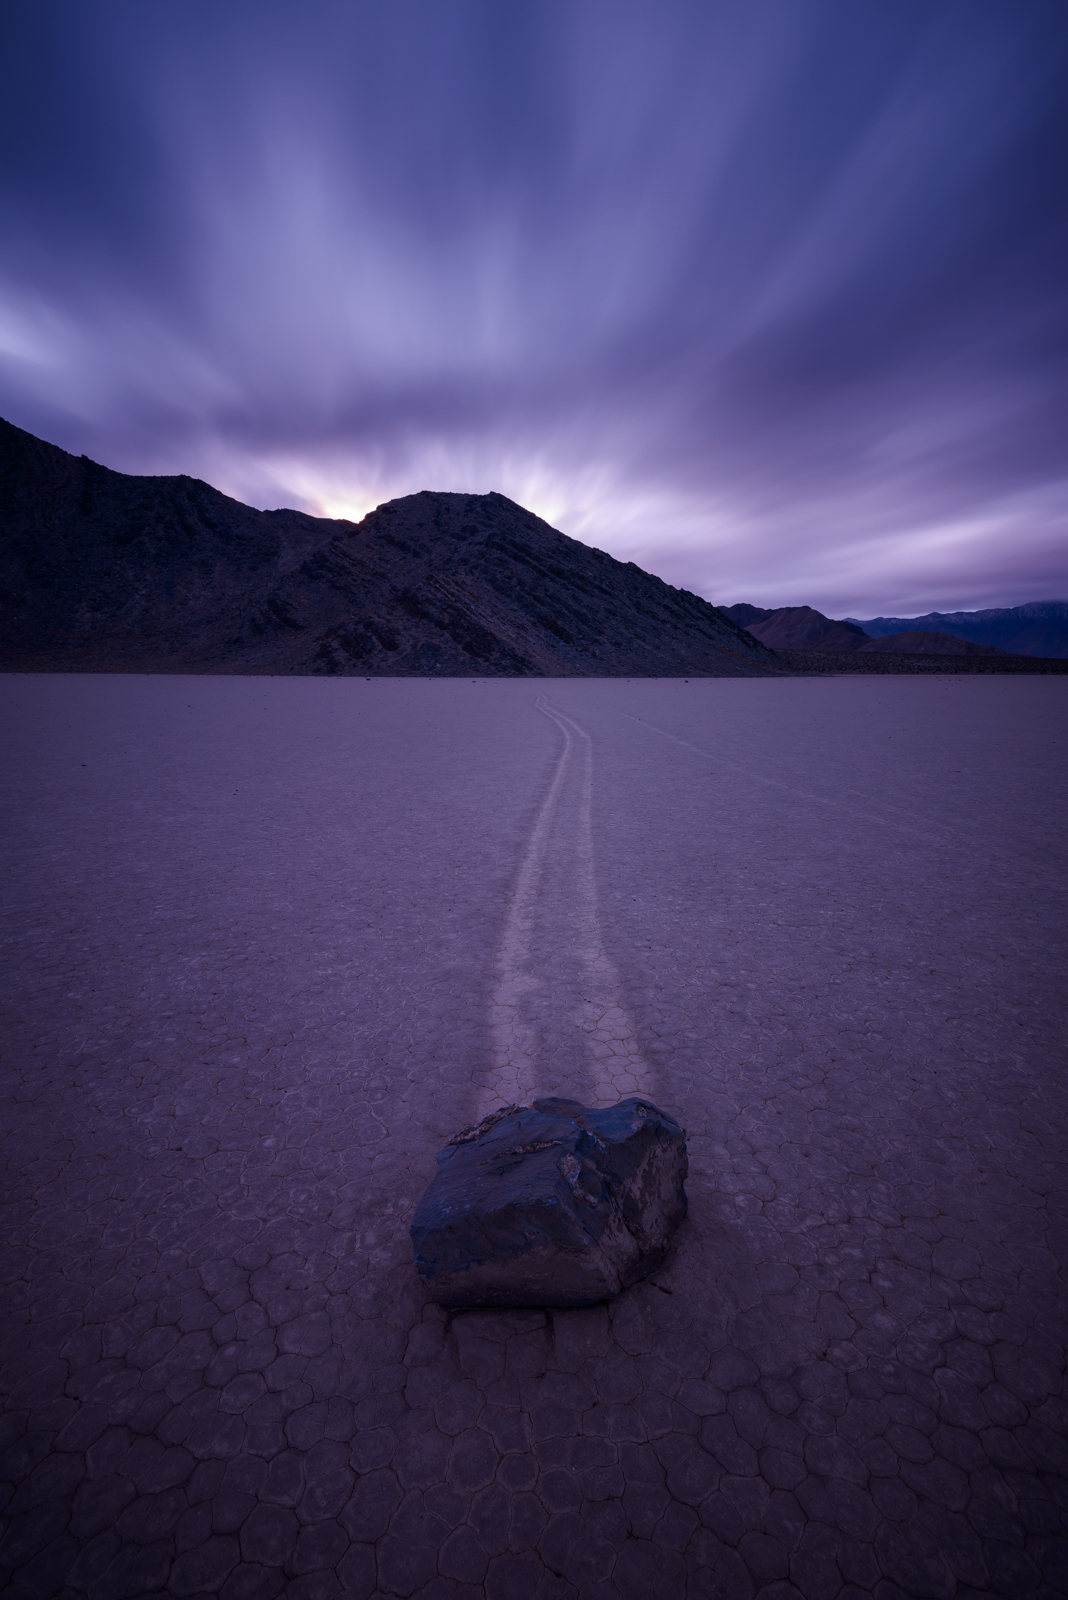 Death Valley National Park Photography Workshop